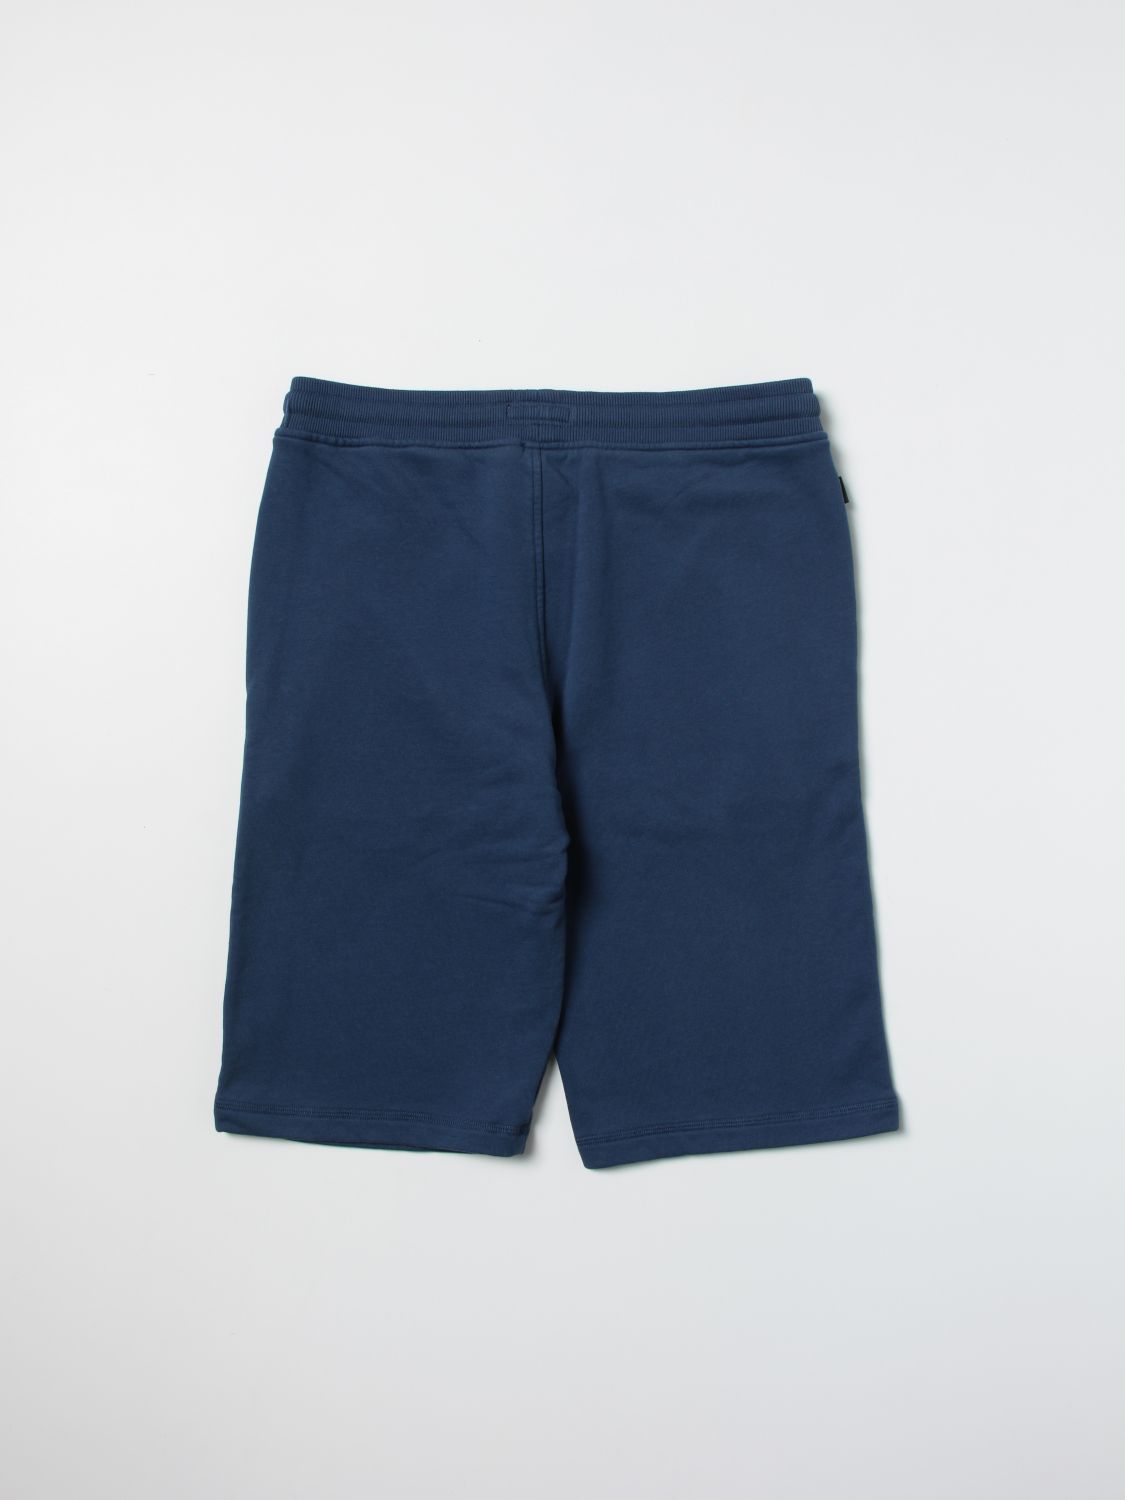 Shorts Woolrich: Woolrich shorts for boys blue 1 2